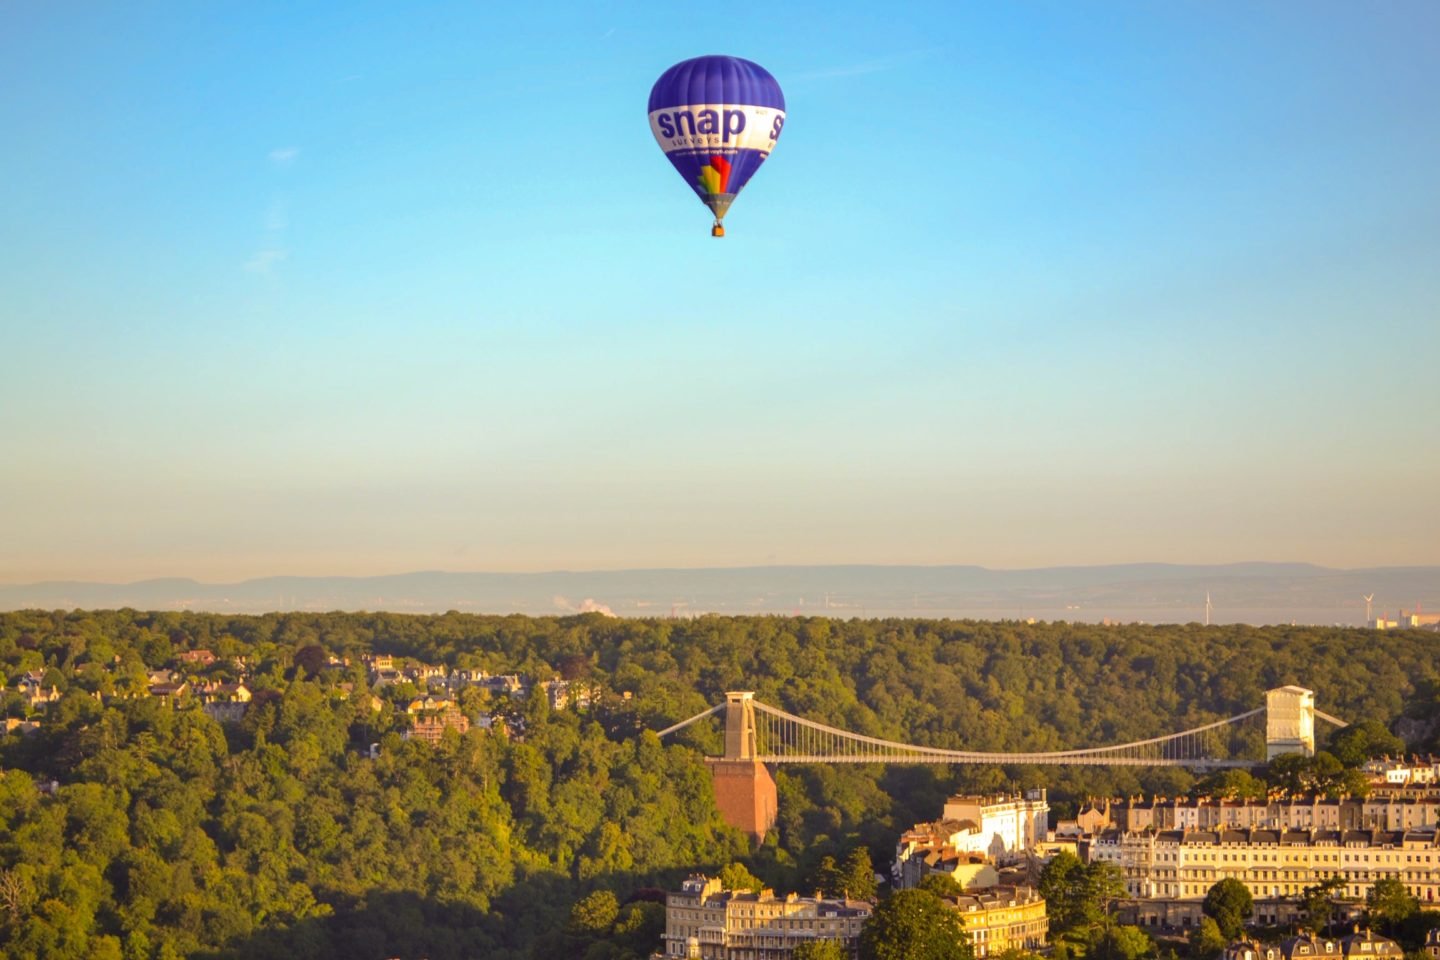 Hot air balloon ride over Bristol